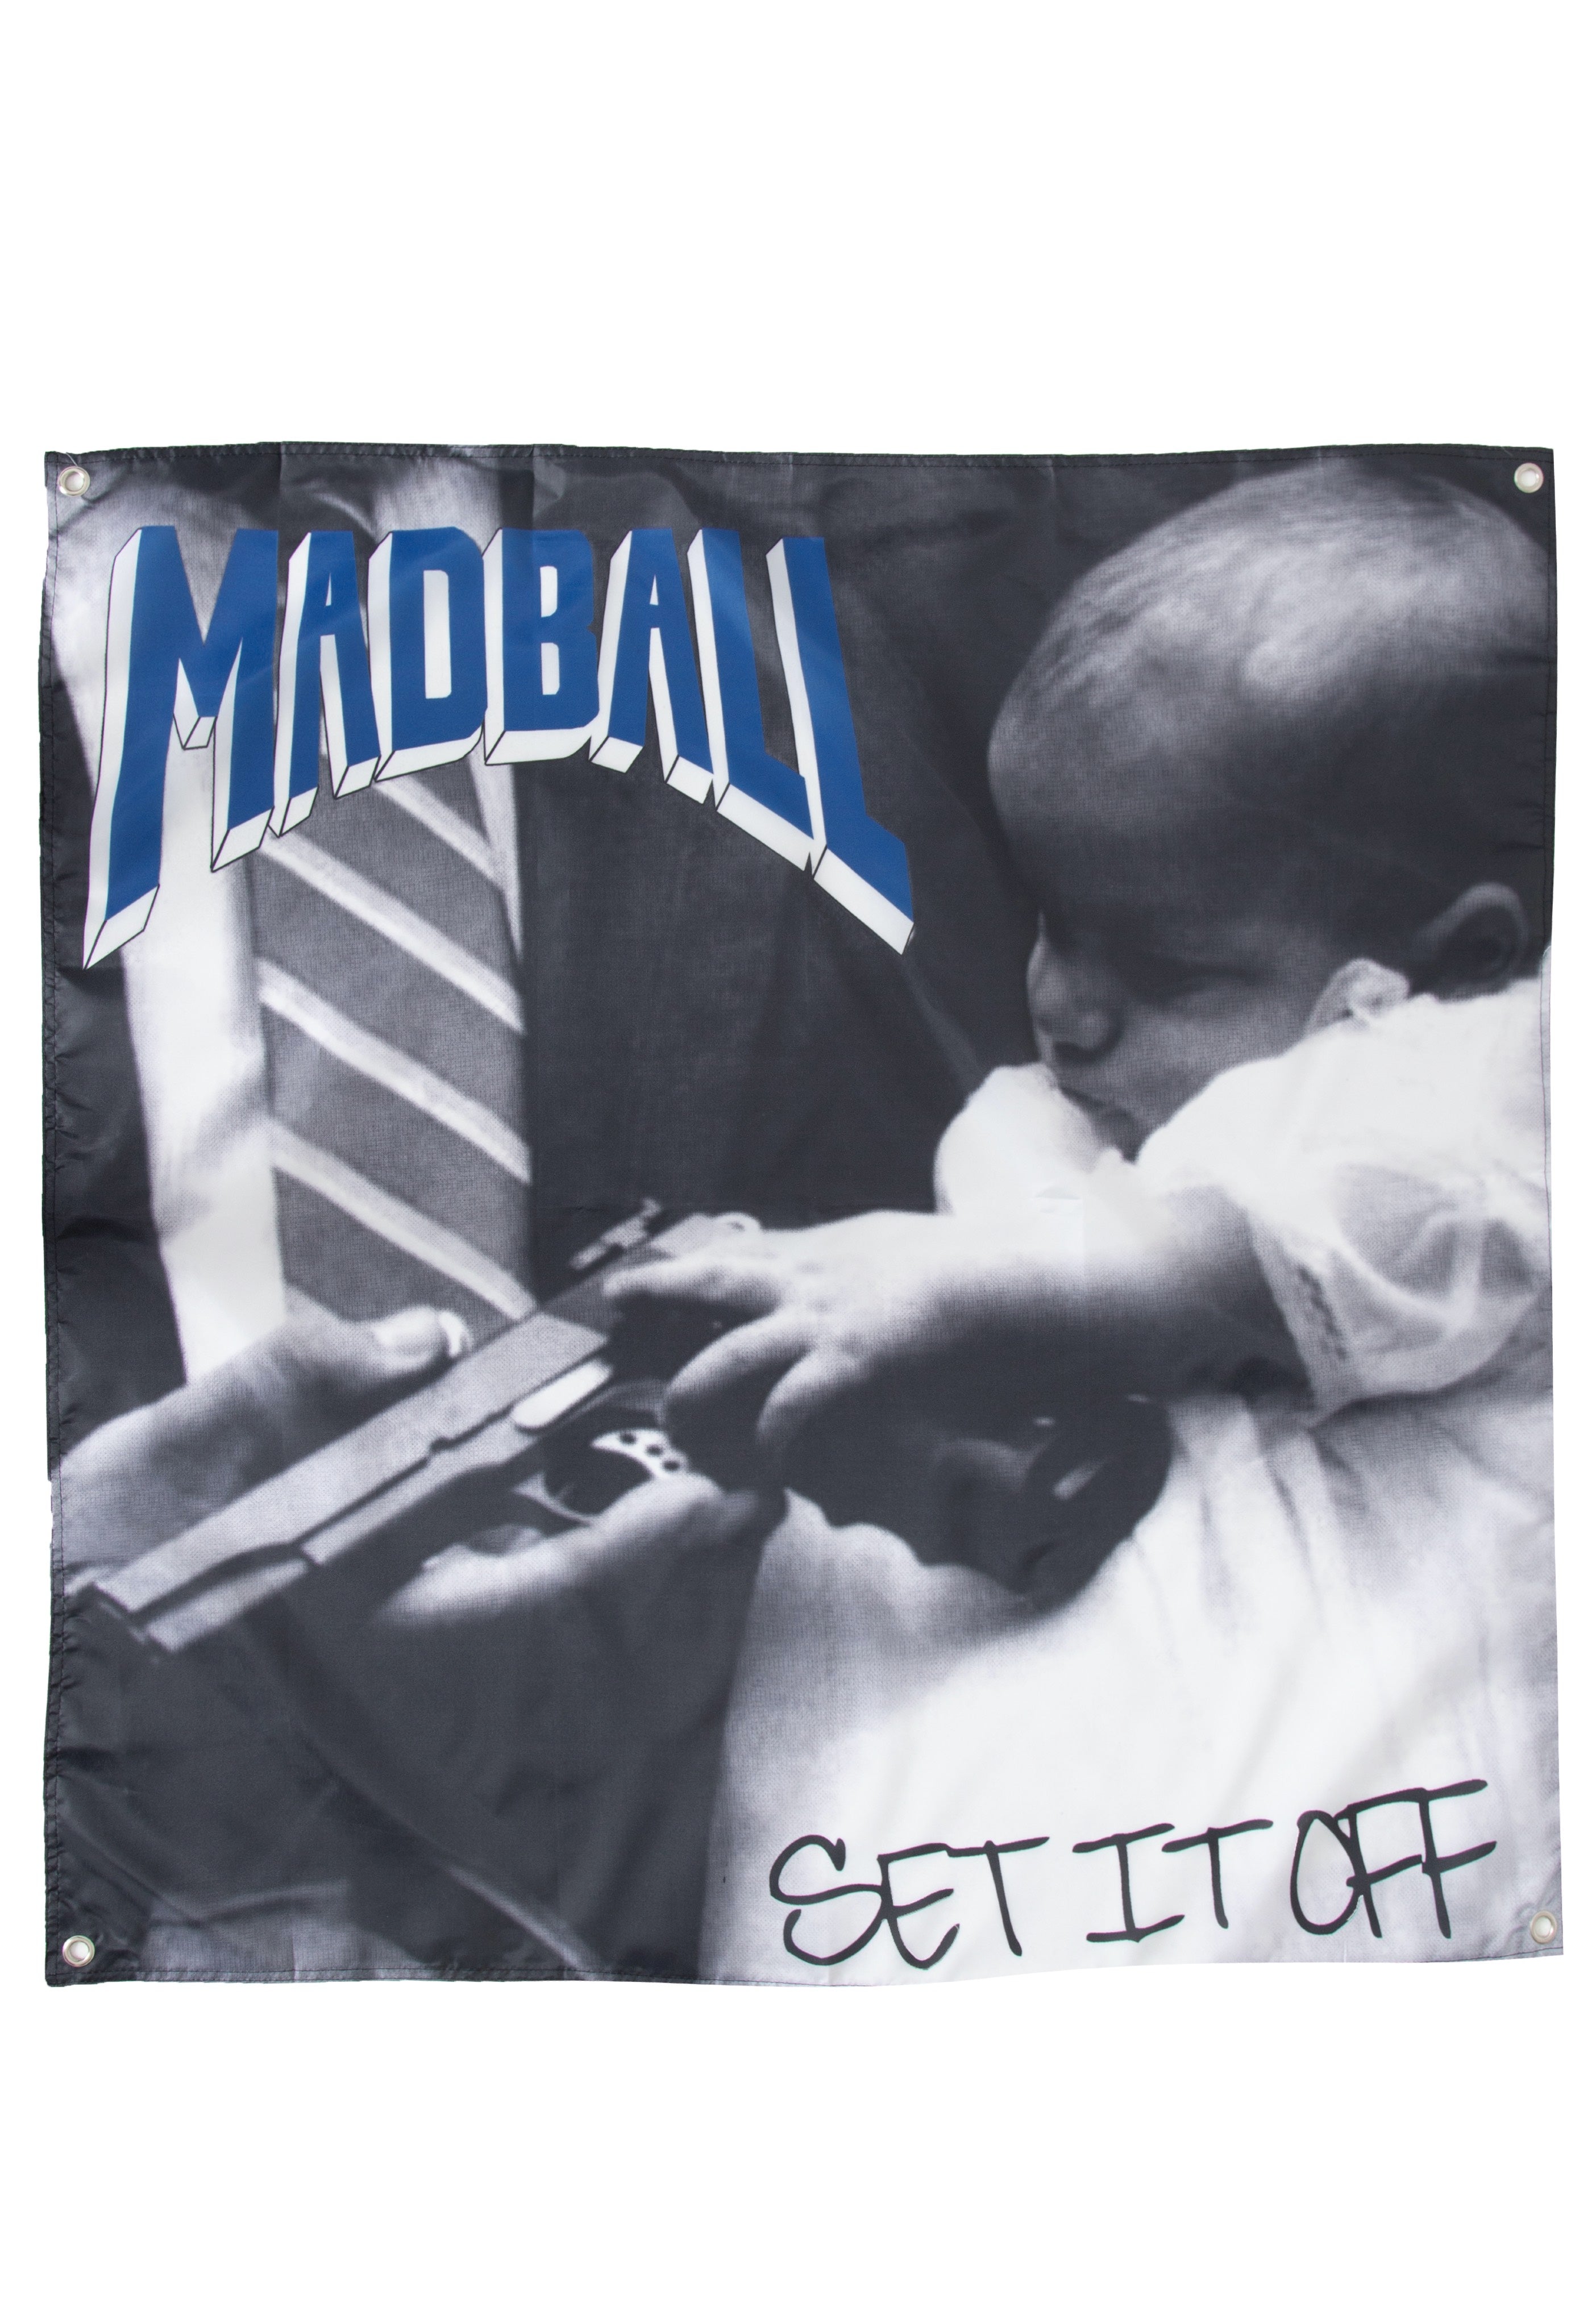 Madball - Set It Off - Flag